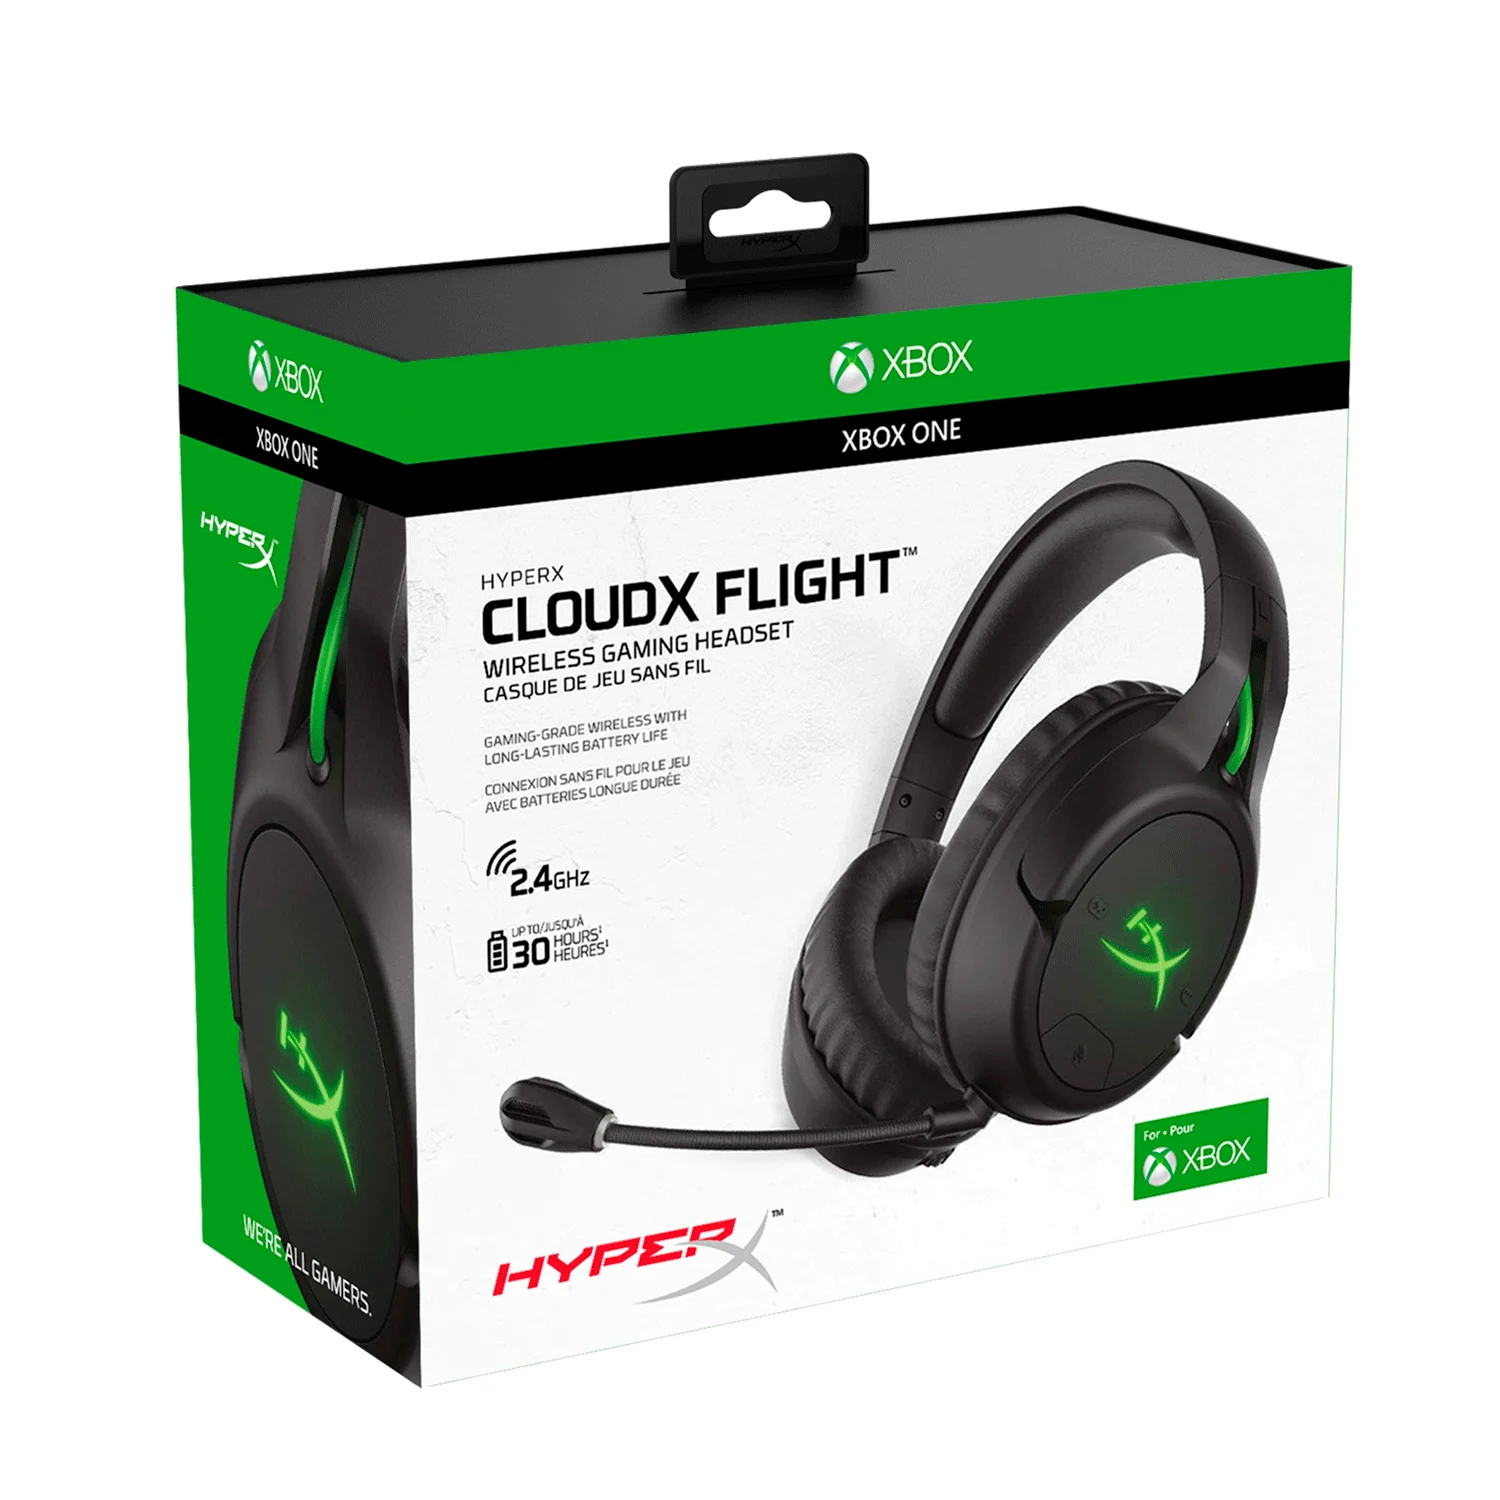 Headset Gamer Kingston Hyper X Cloud Flight para Xbox One / Wireless - Preto (HX-HSCFX-BK/WW)

